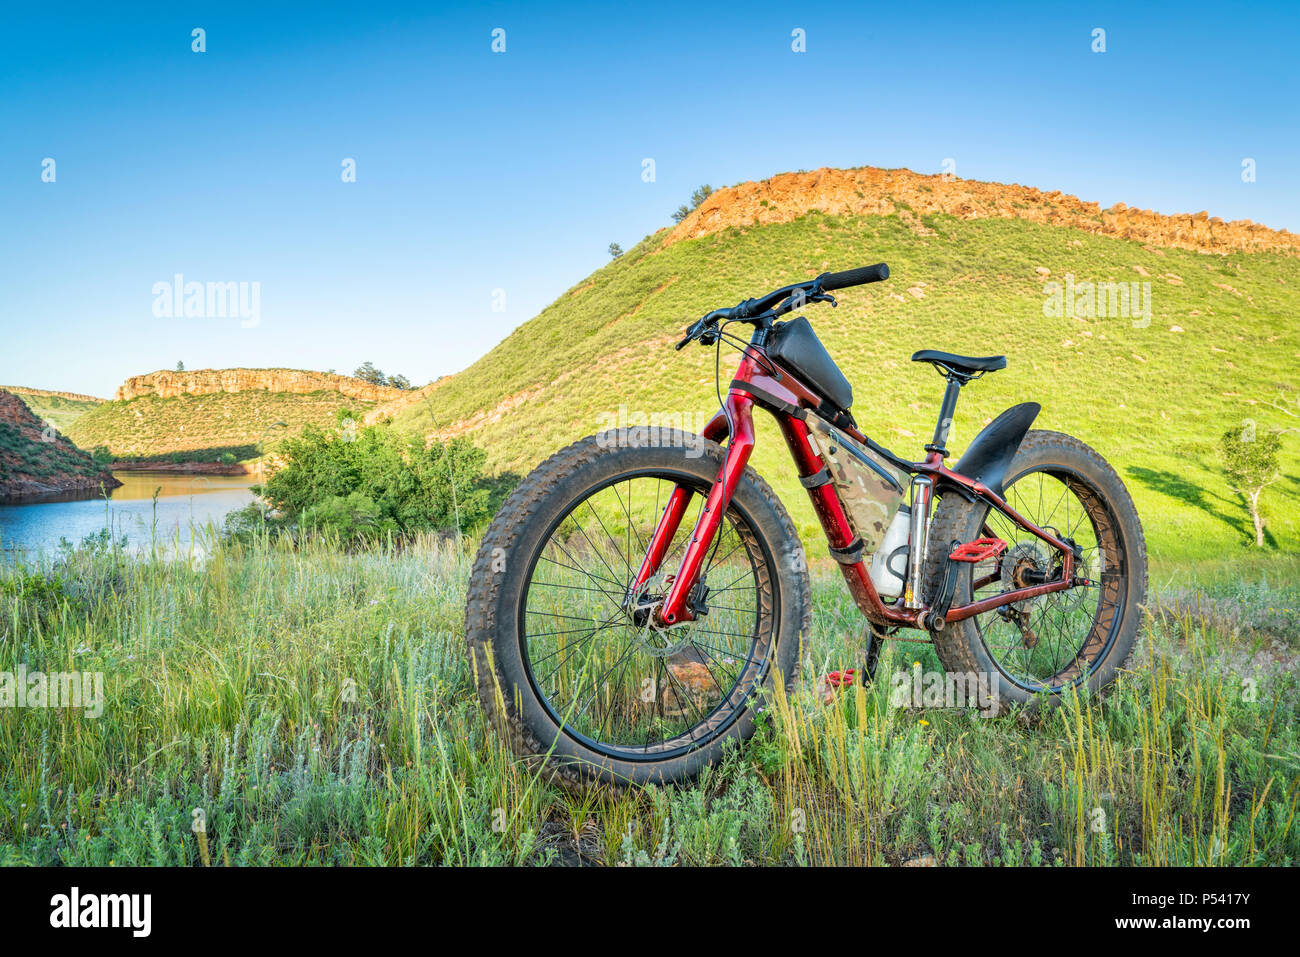 Fat Mountainbike an Grasbewachsenen Ausläufer des Colorado, späten Frühling Landschaft Stockfoto